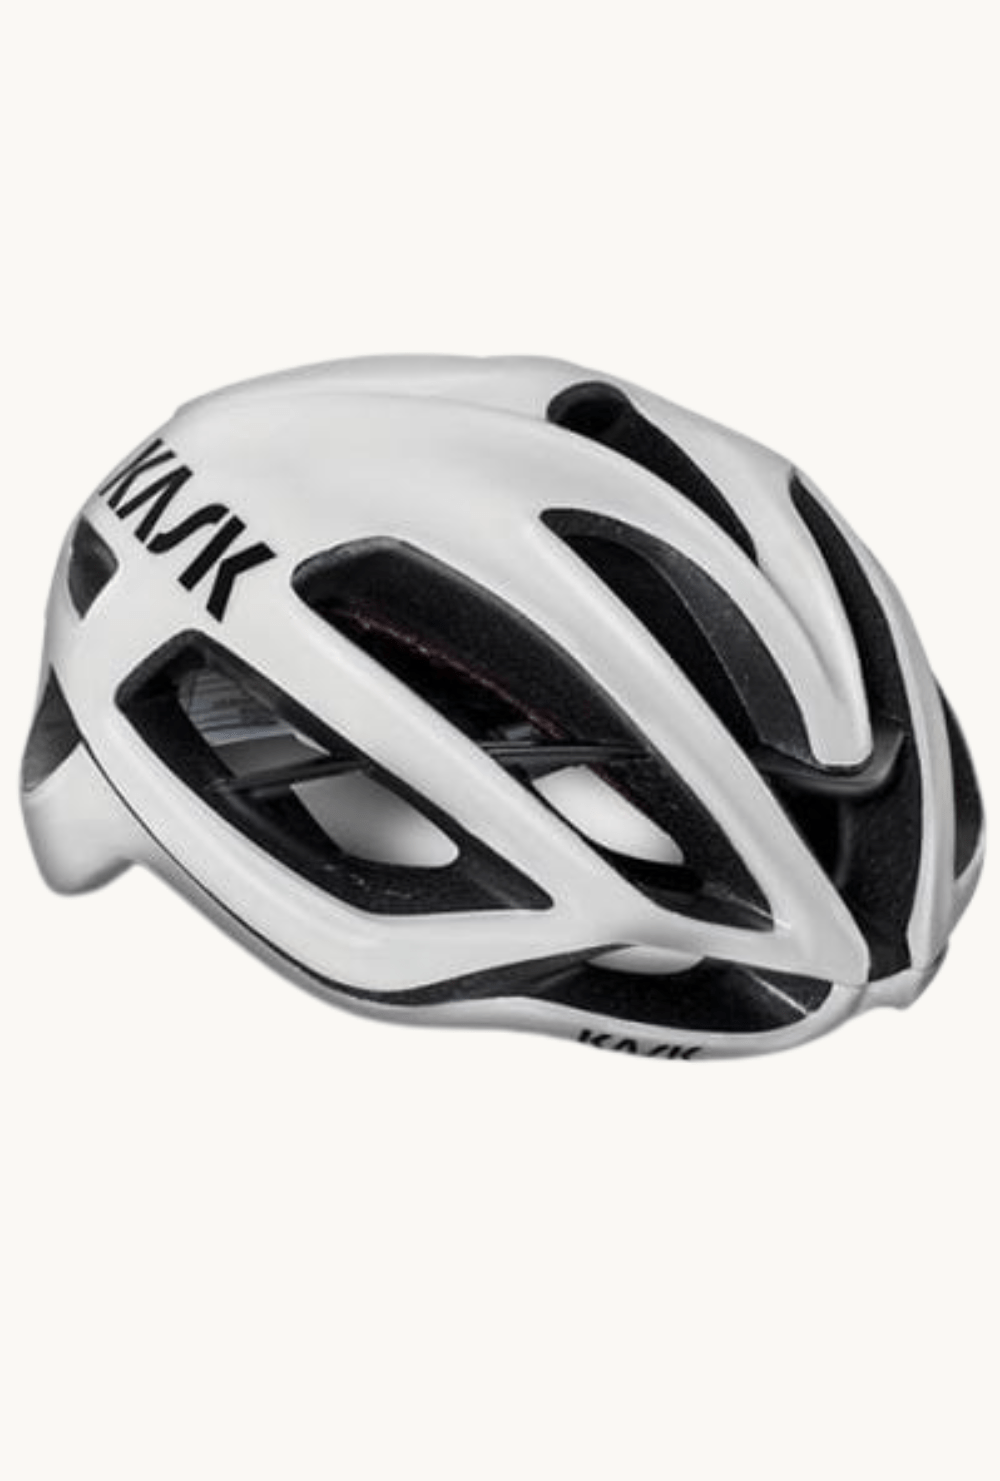 Helmet - Kask Protone Whitemedium (52-58cm) / White